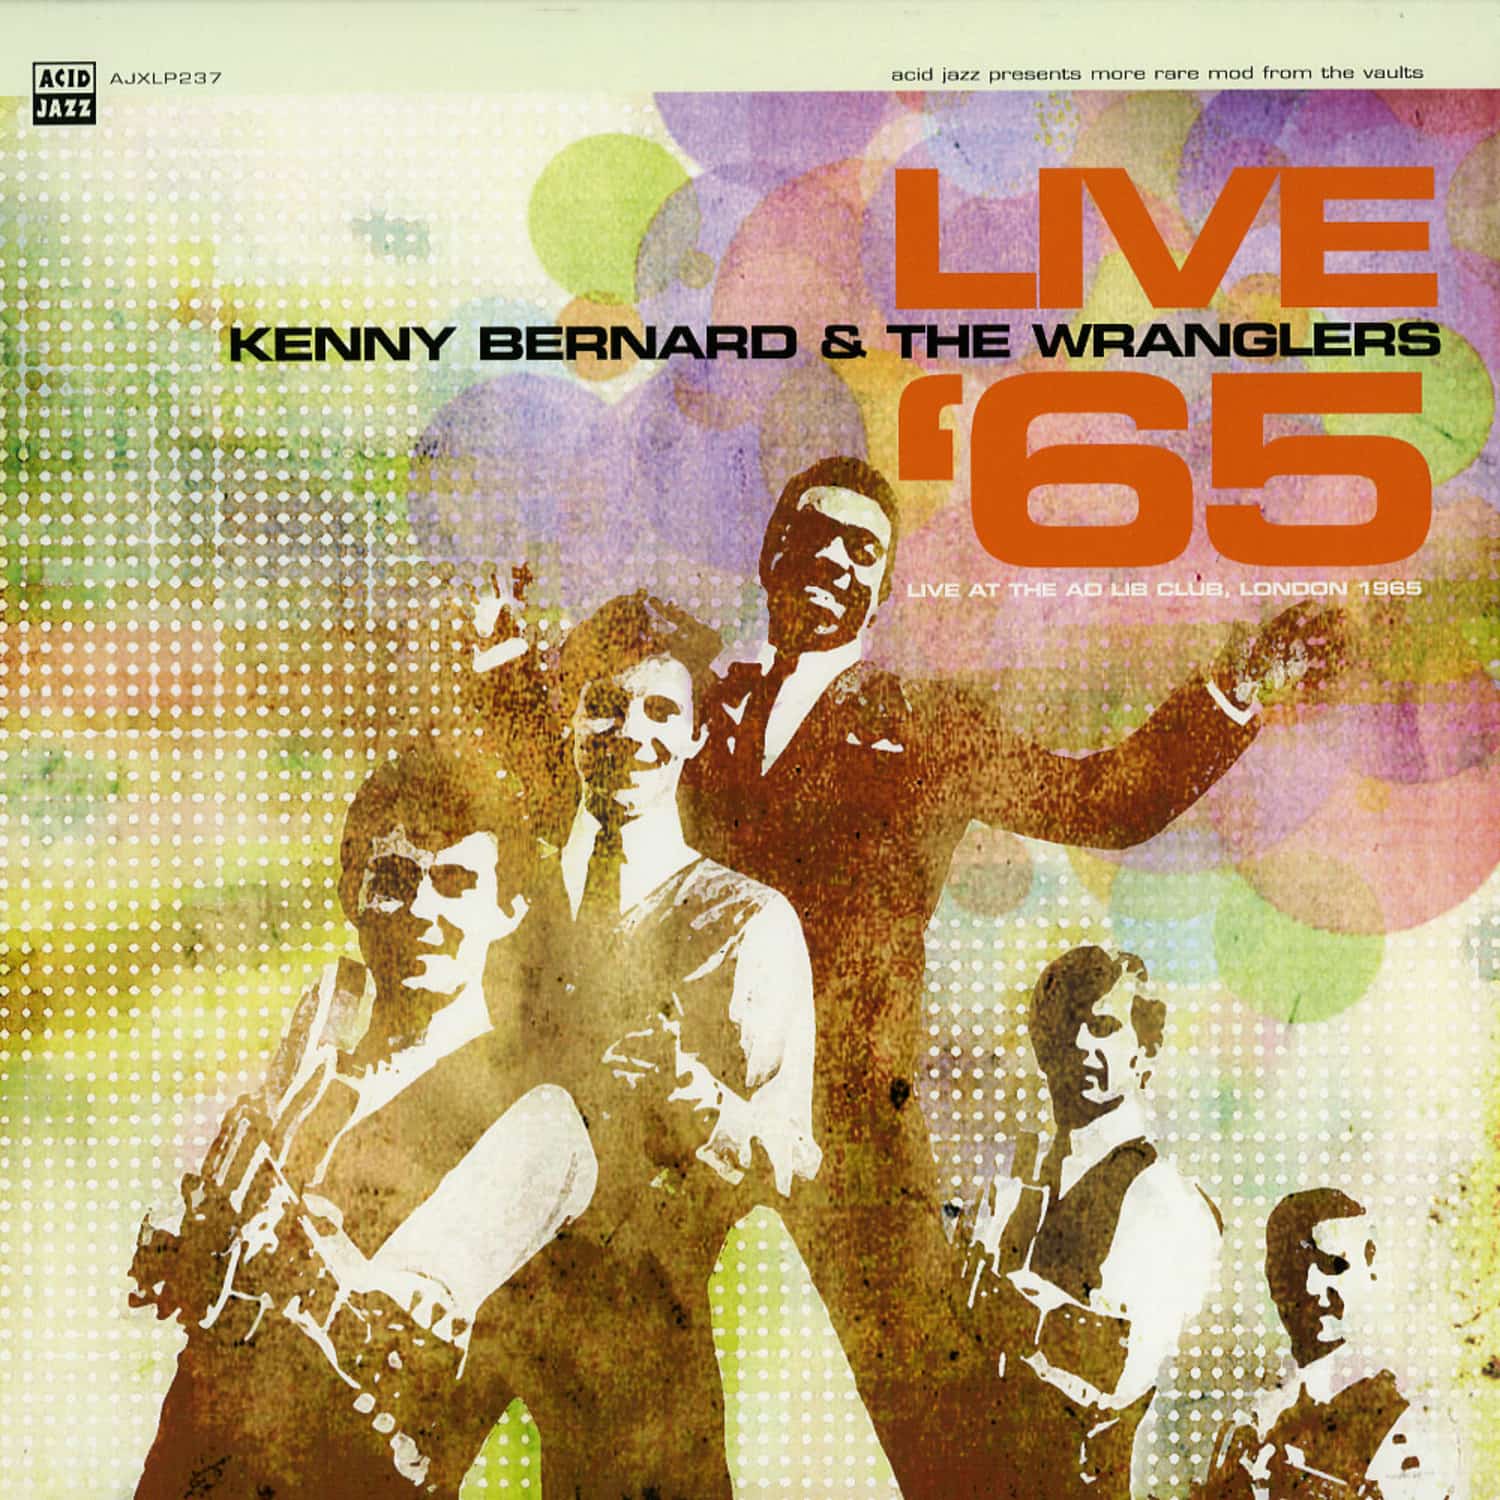 Kenny Bernard & The Wranglers - LIVE 65 